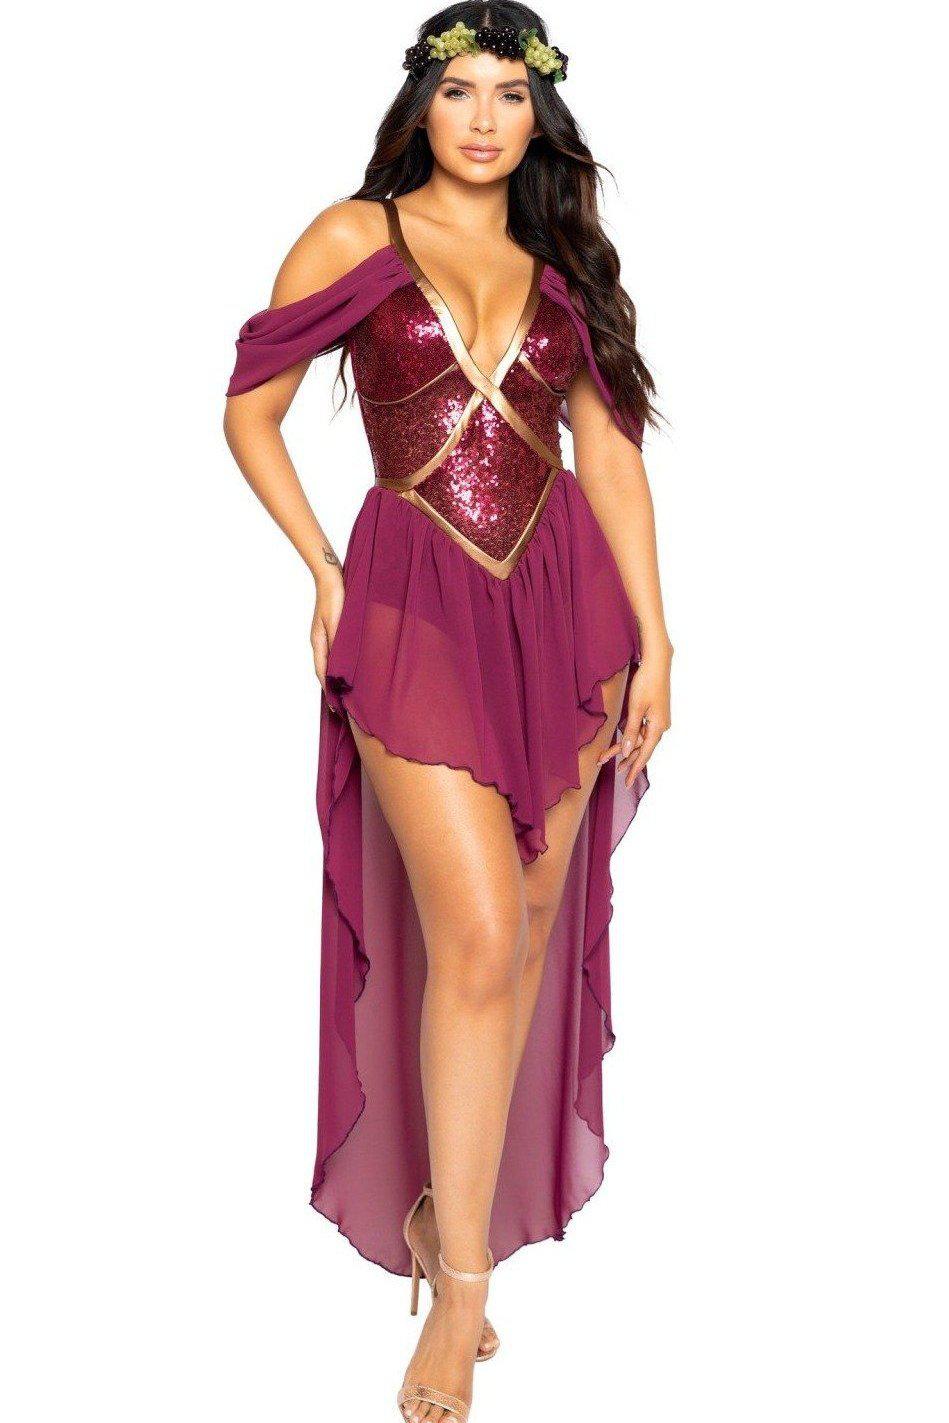 2 Piece Wine Goddess Costume-Goddess Costumes-Roma Costume-SEXYSHOES.COM